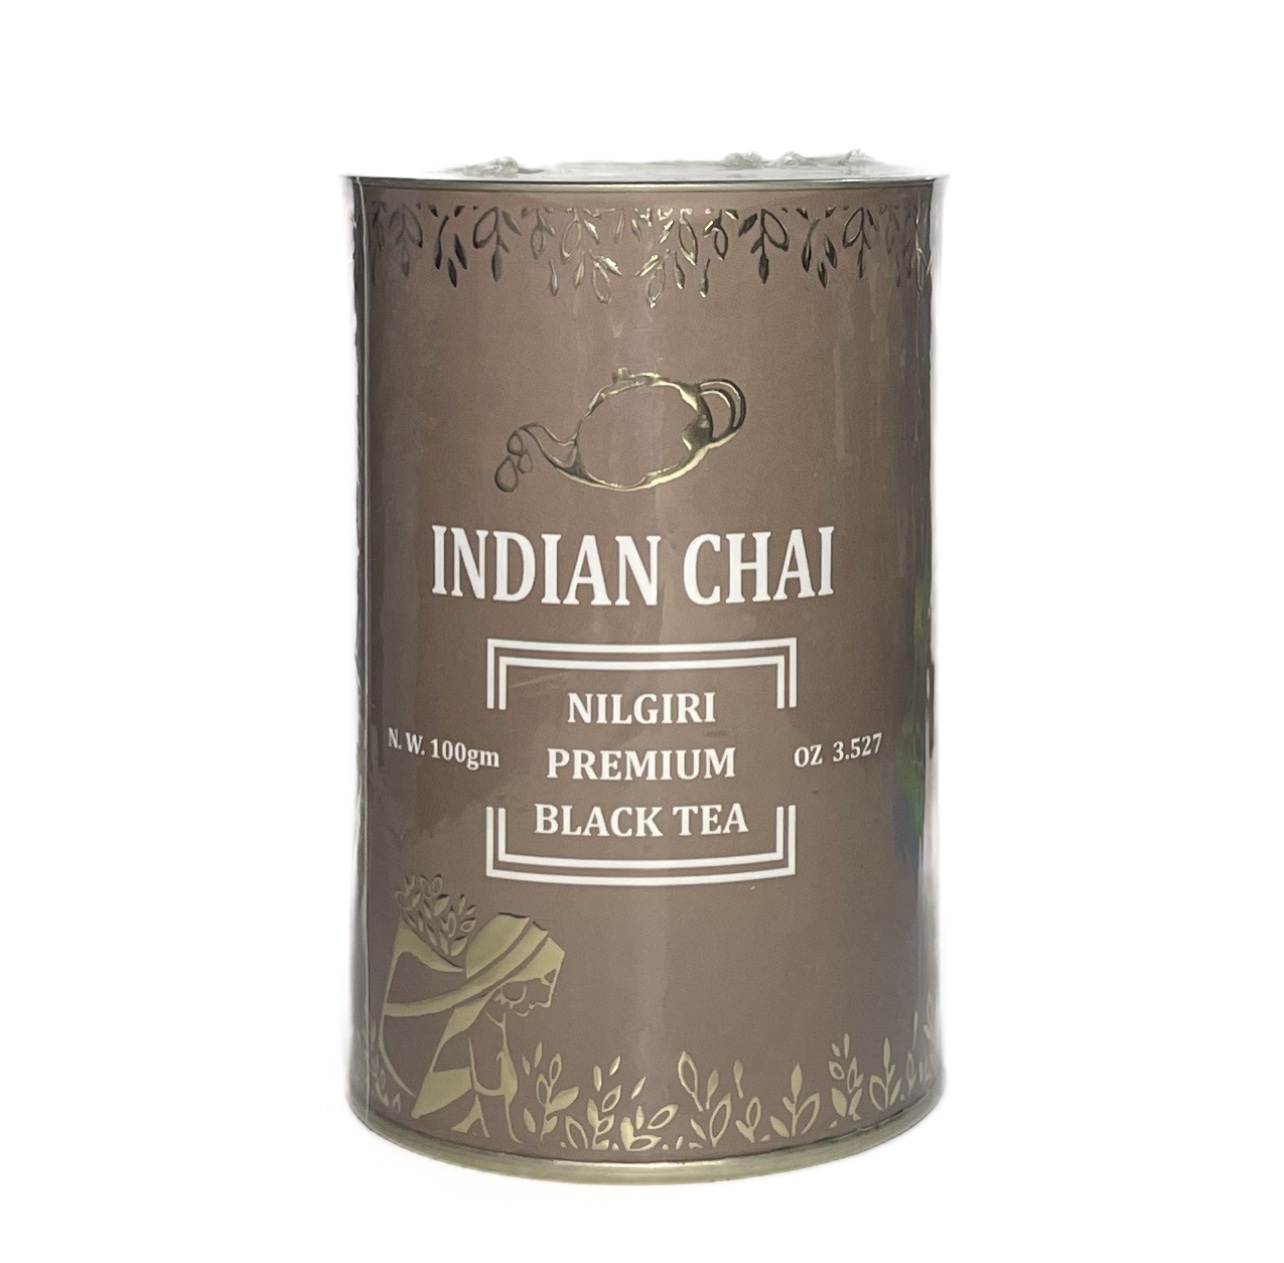 Indian Chai NILGIRI Premium BLACK TEA, Bharat Bazaar (НИЛГИРИ Премиум, ЧЕРНЫЙ ЧАЙ, Бхарат Базаар), банка 100 г.